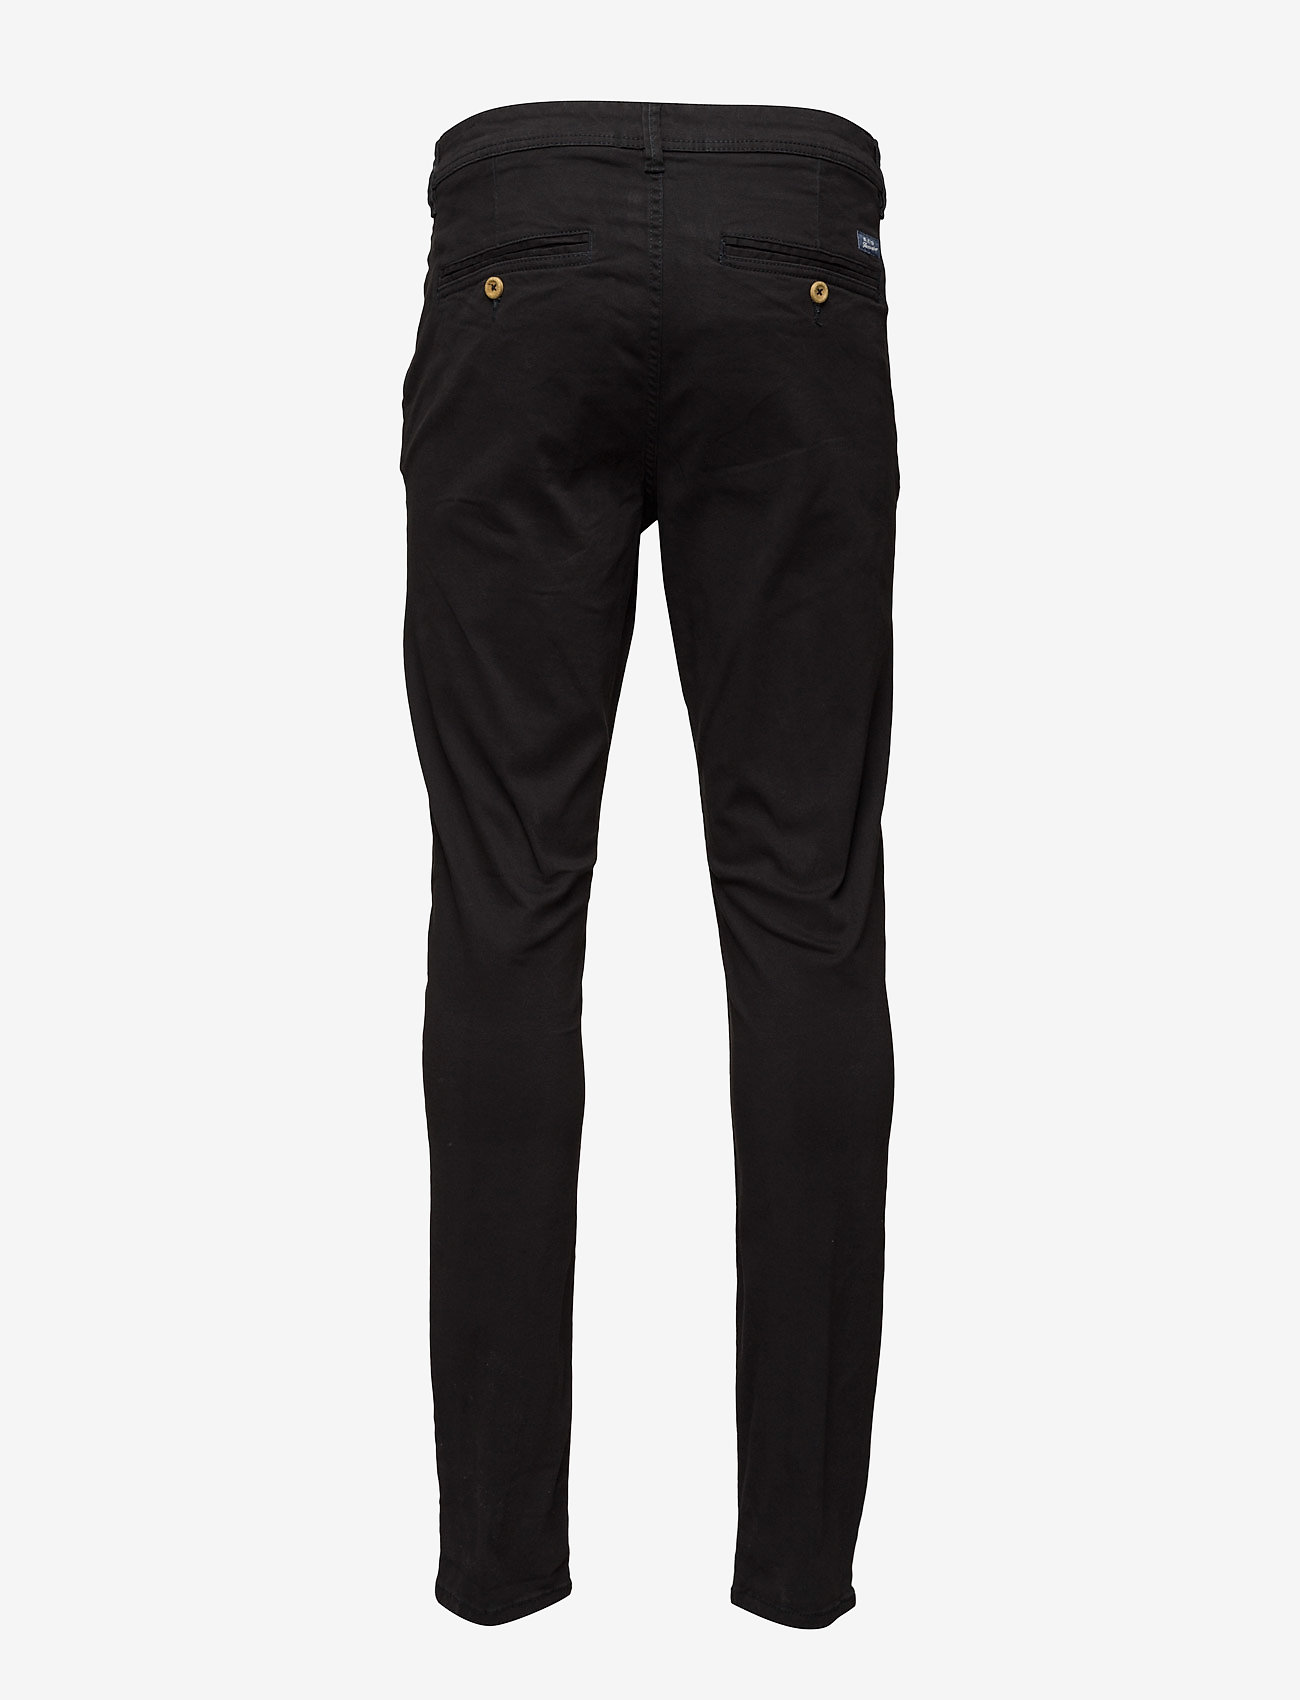 Blend - BHNATAN pants - lowest prices - black - 1